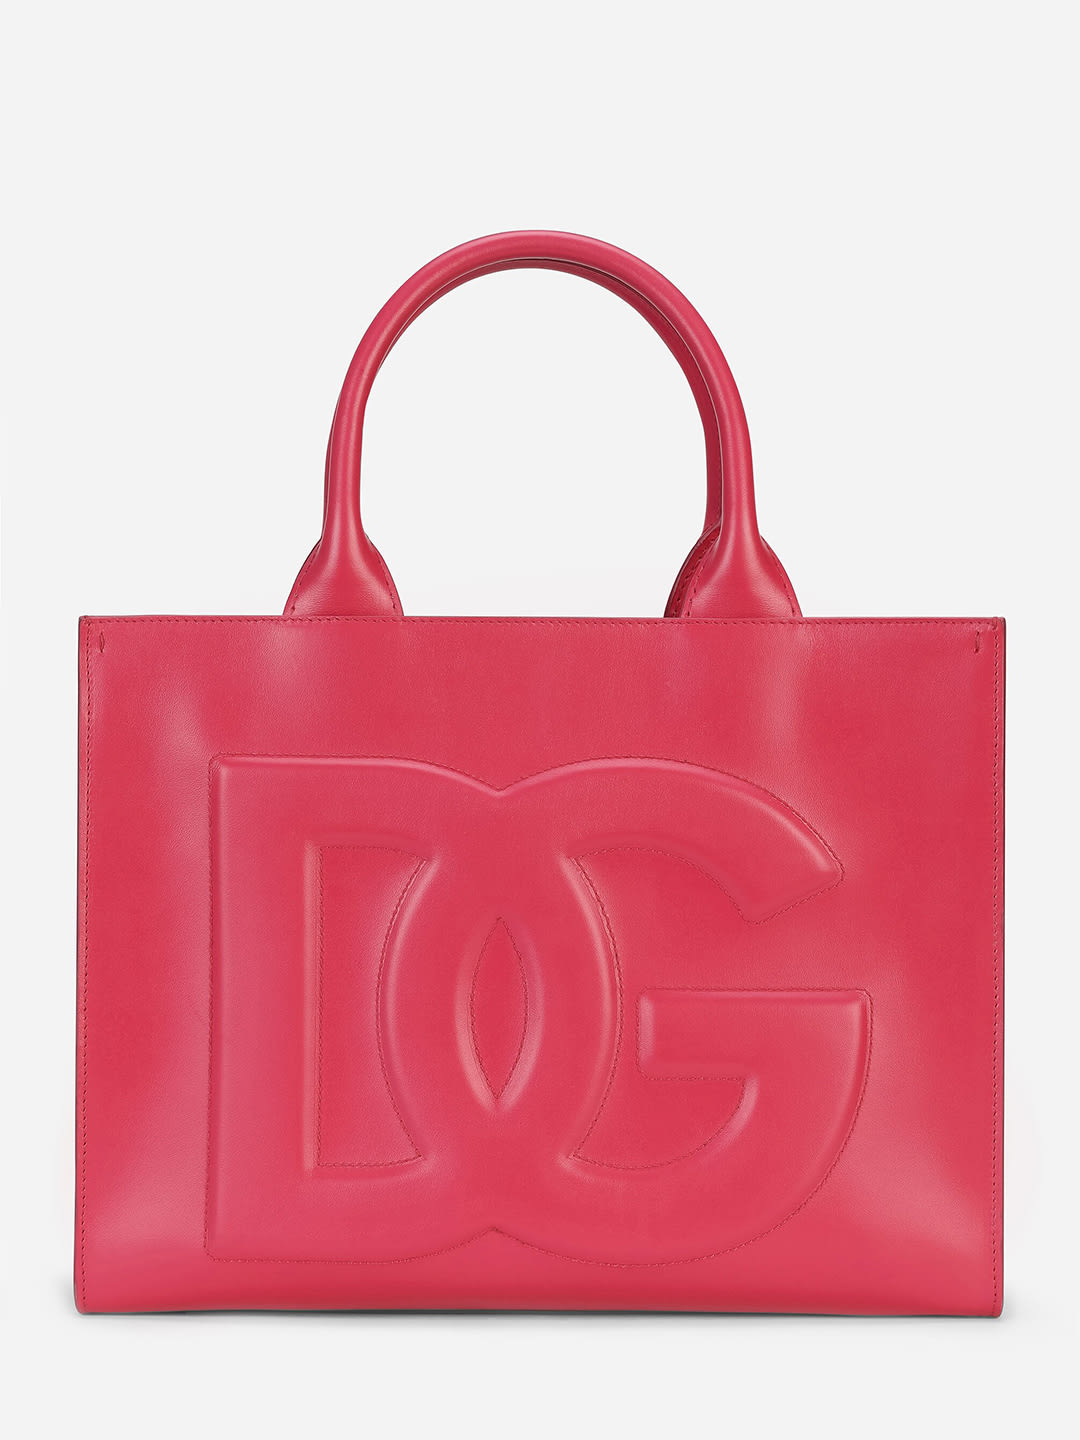 Dolce & Gabbana Fuchsia Small Dg Daily Shopping Bag